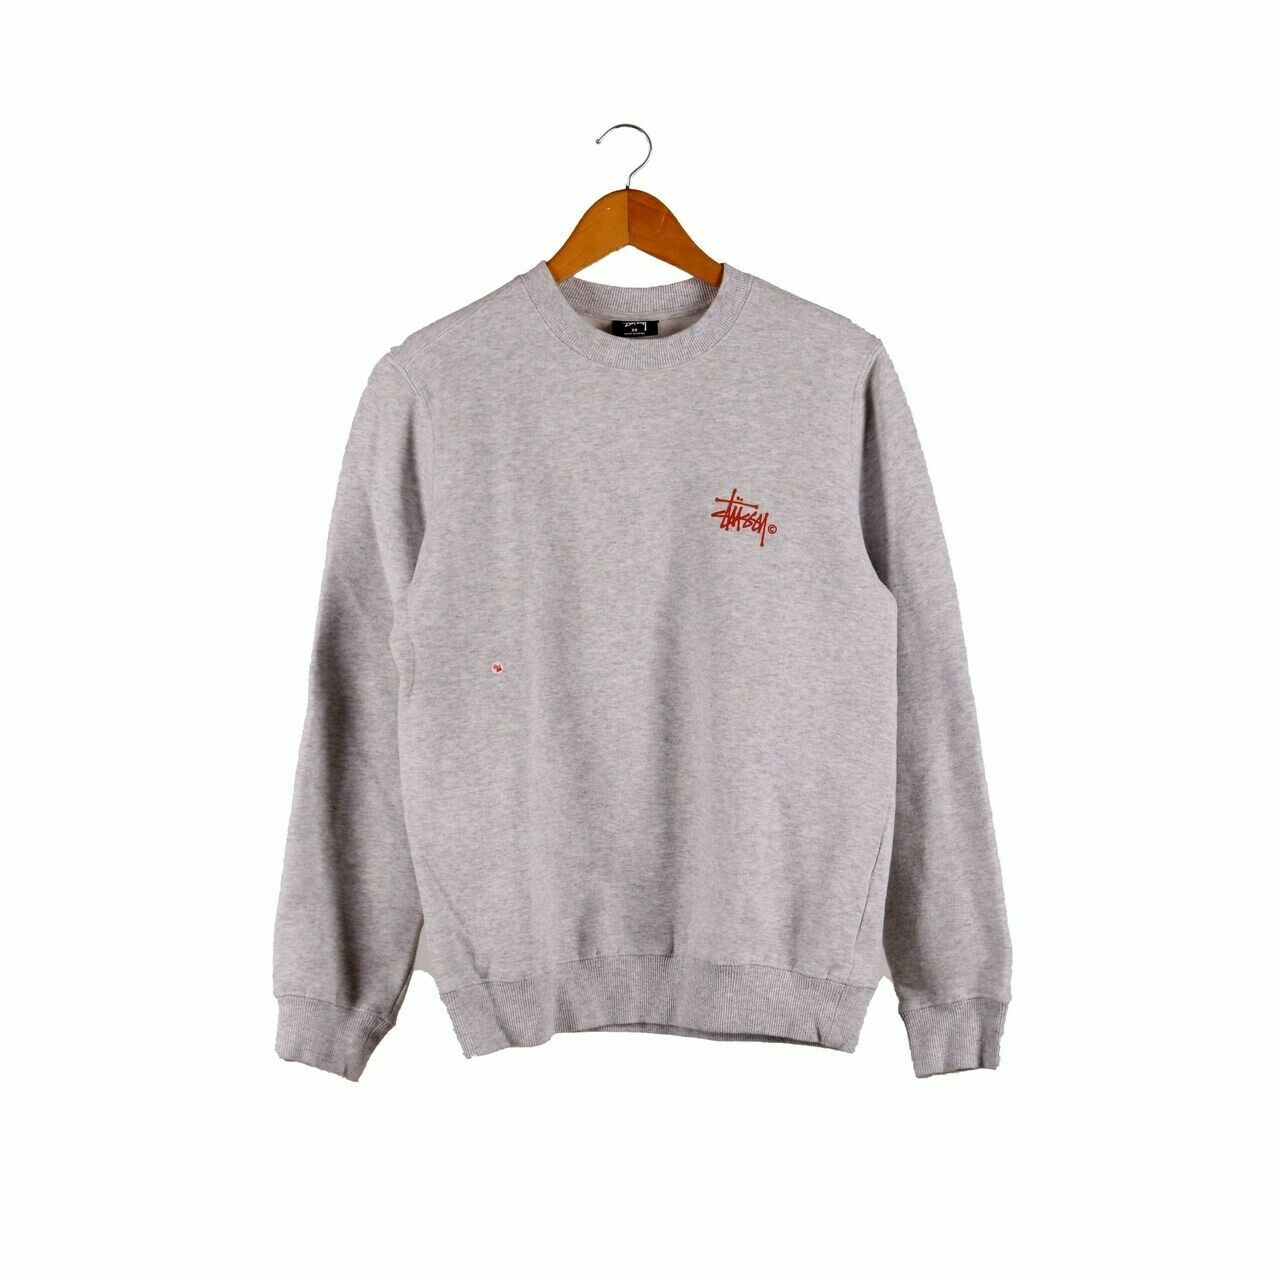 Stussy Grey Sweater